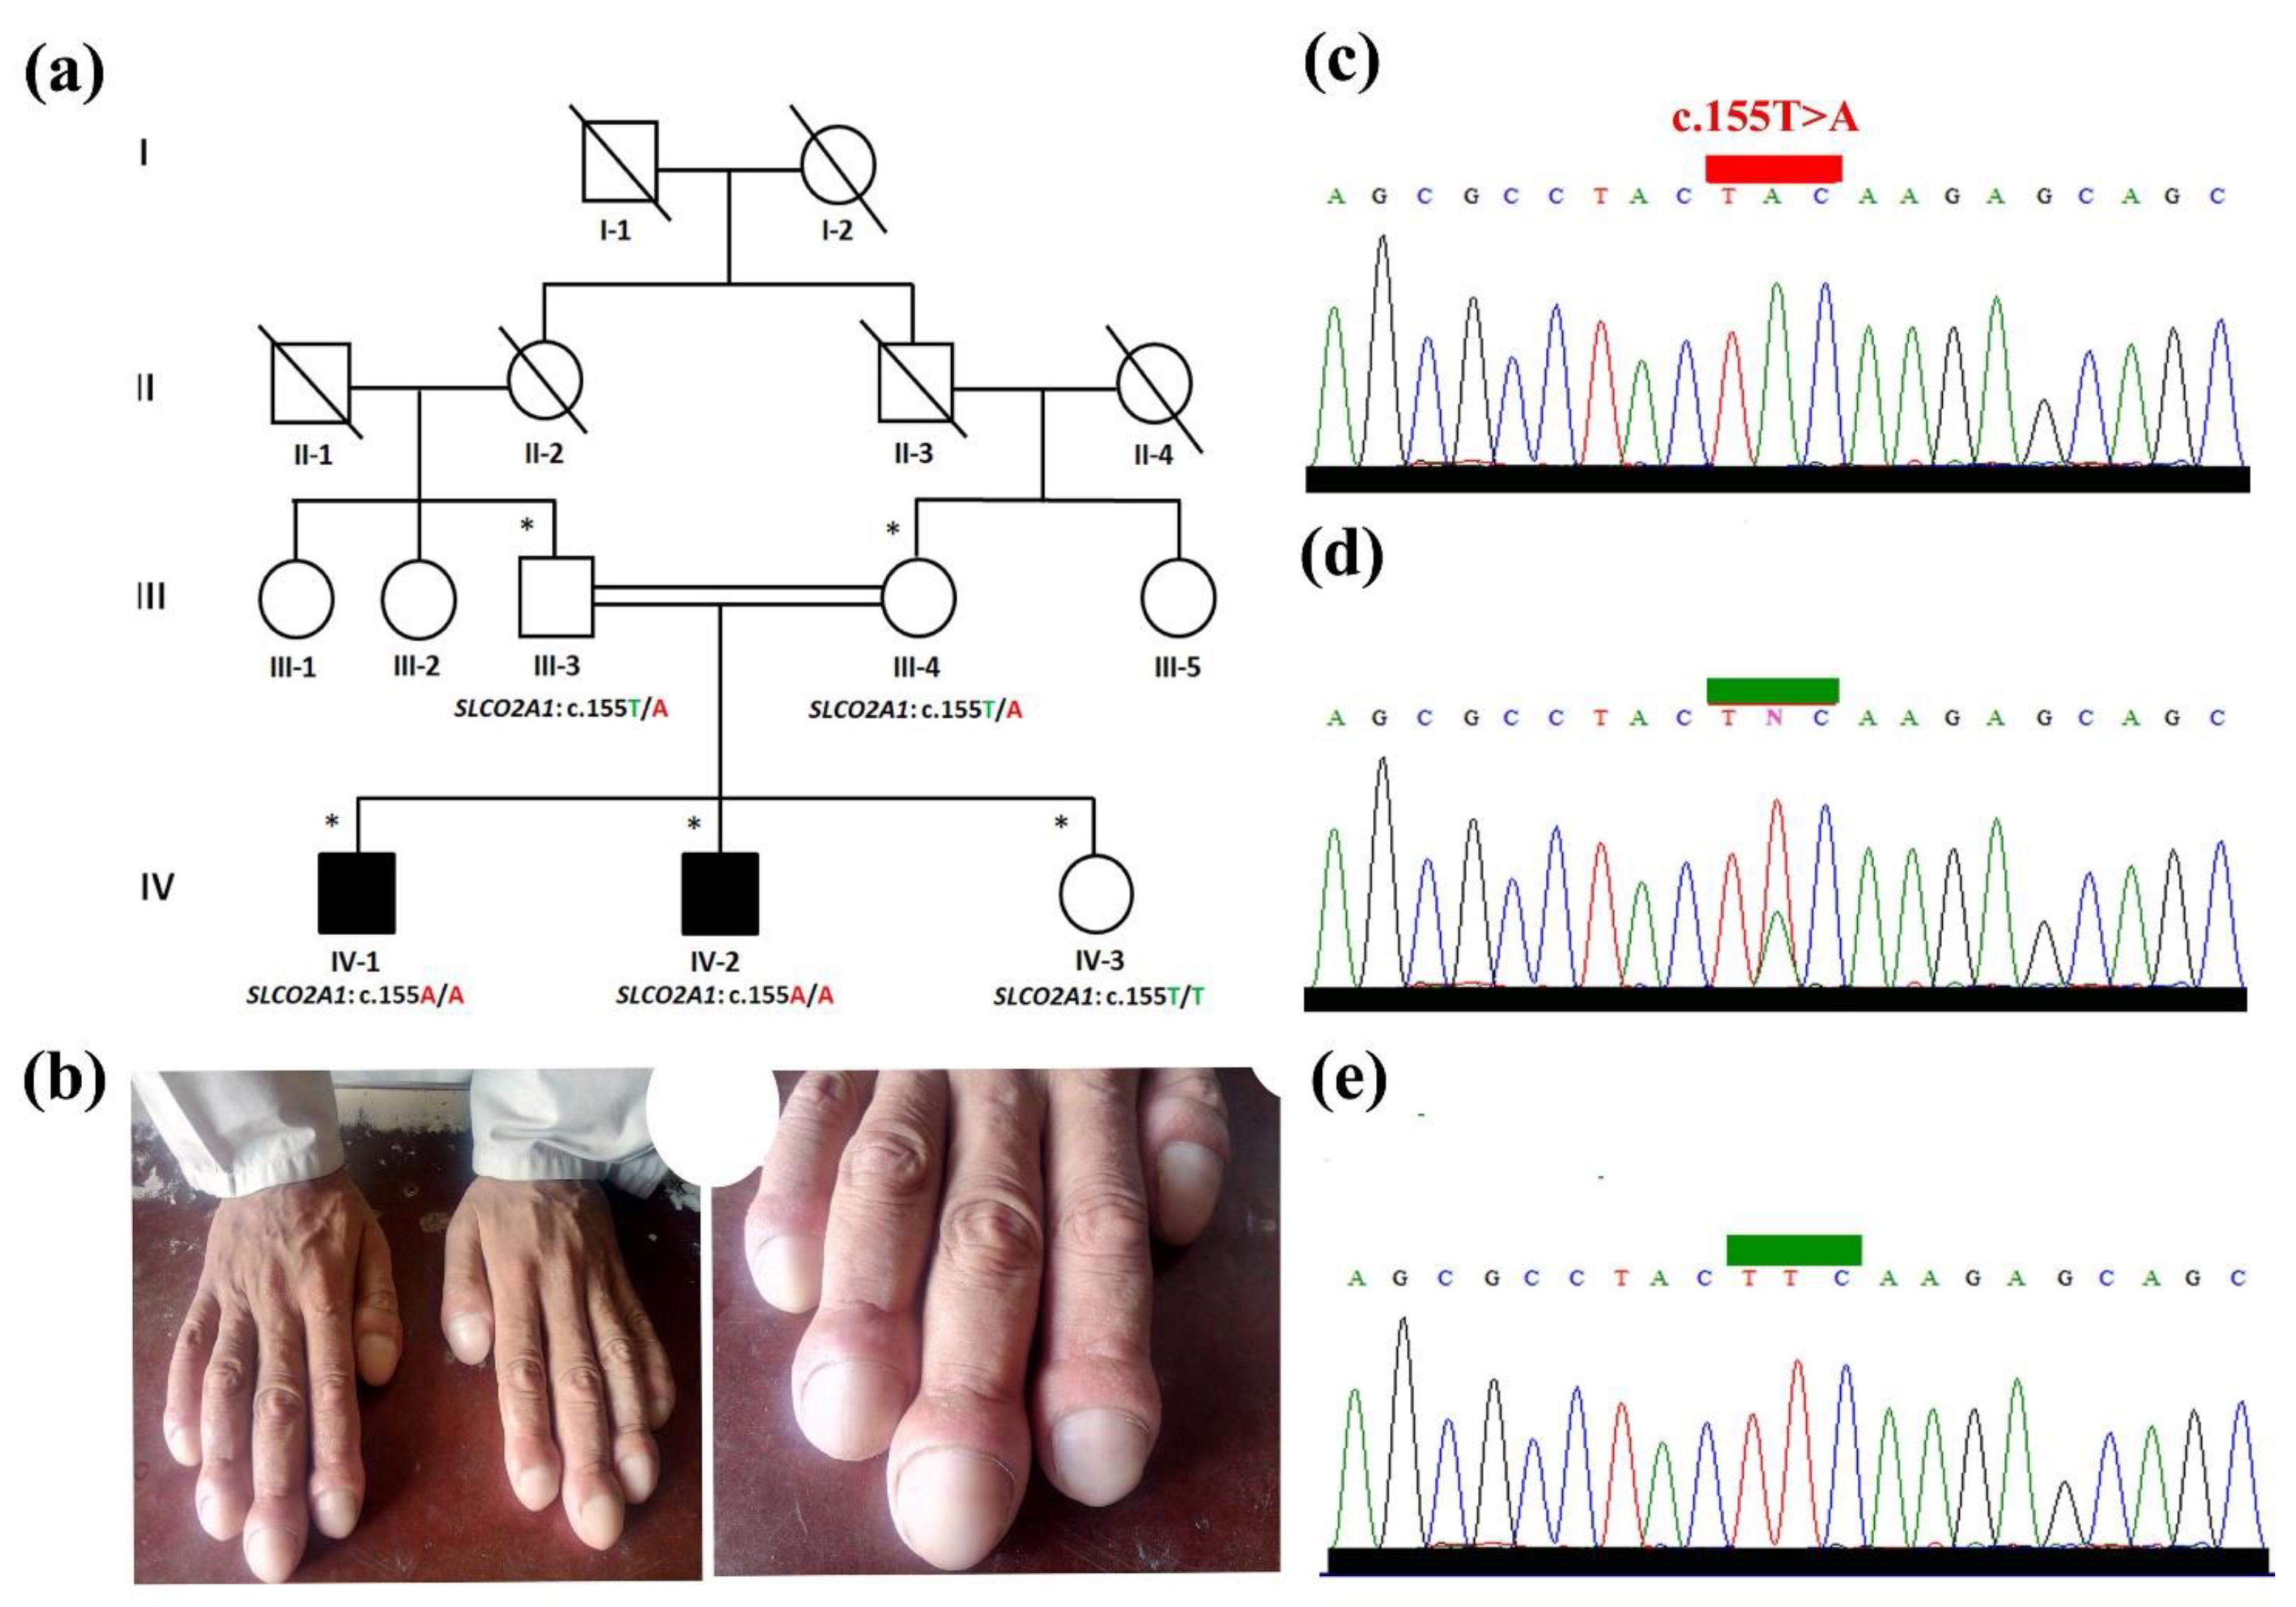 Nonsyndromic congenital nail disorder 10: MedlinePlus Genetics